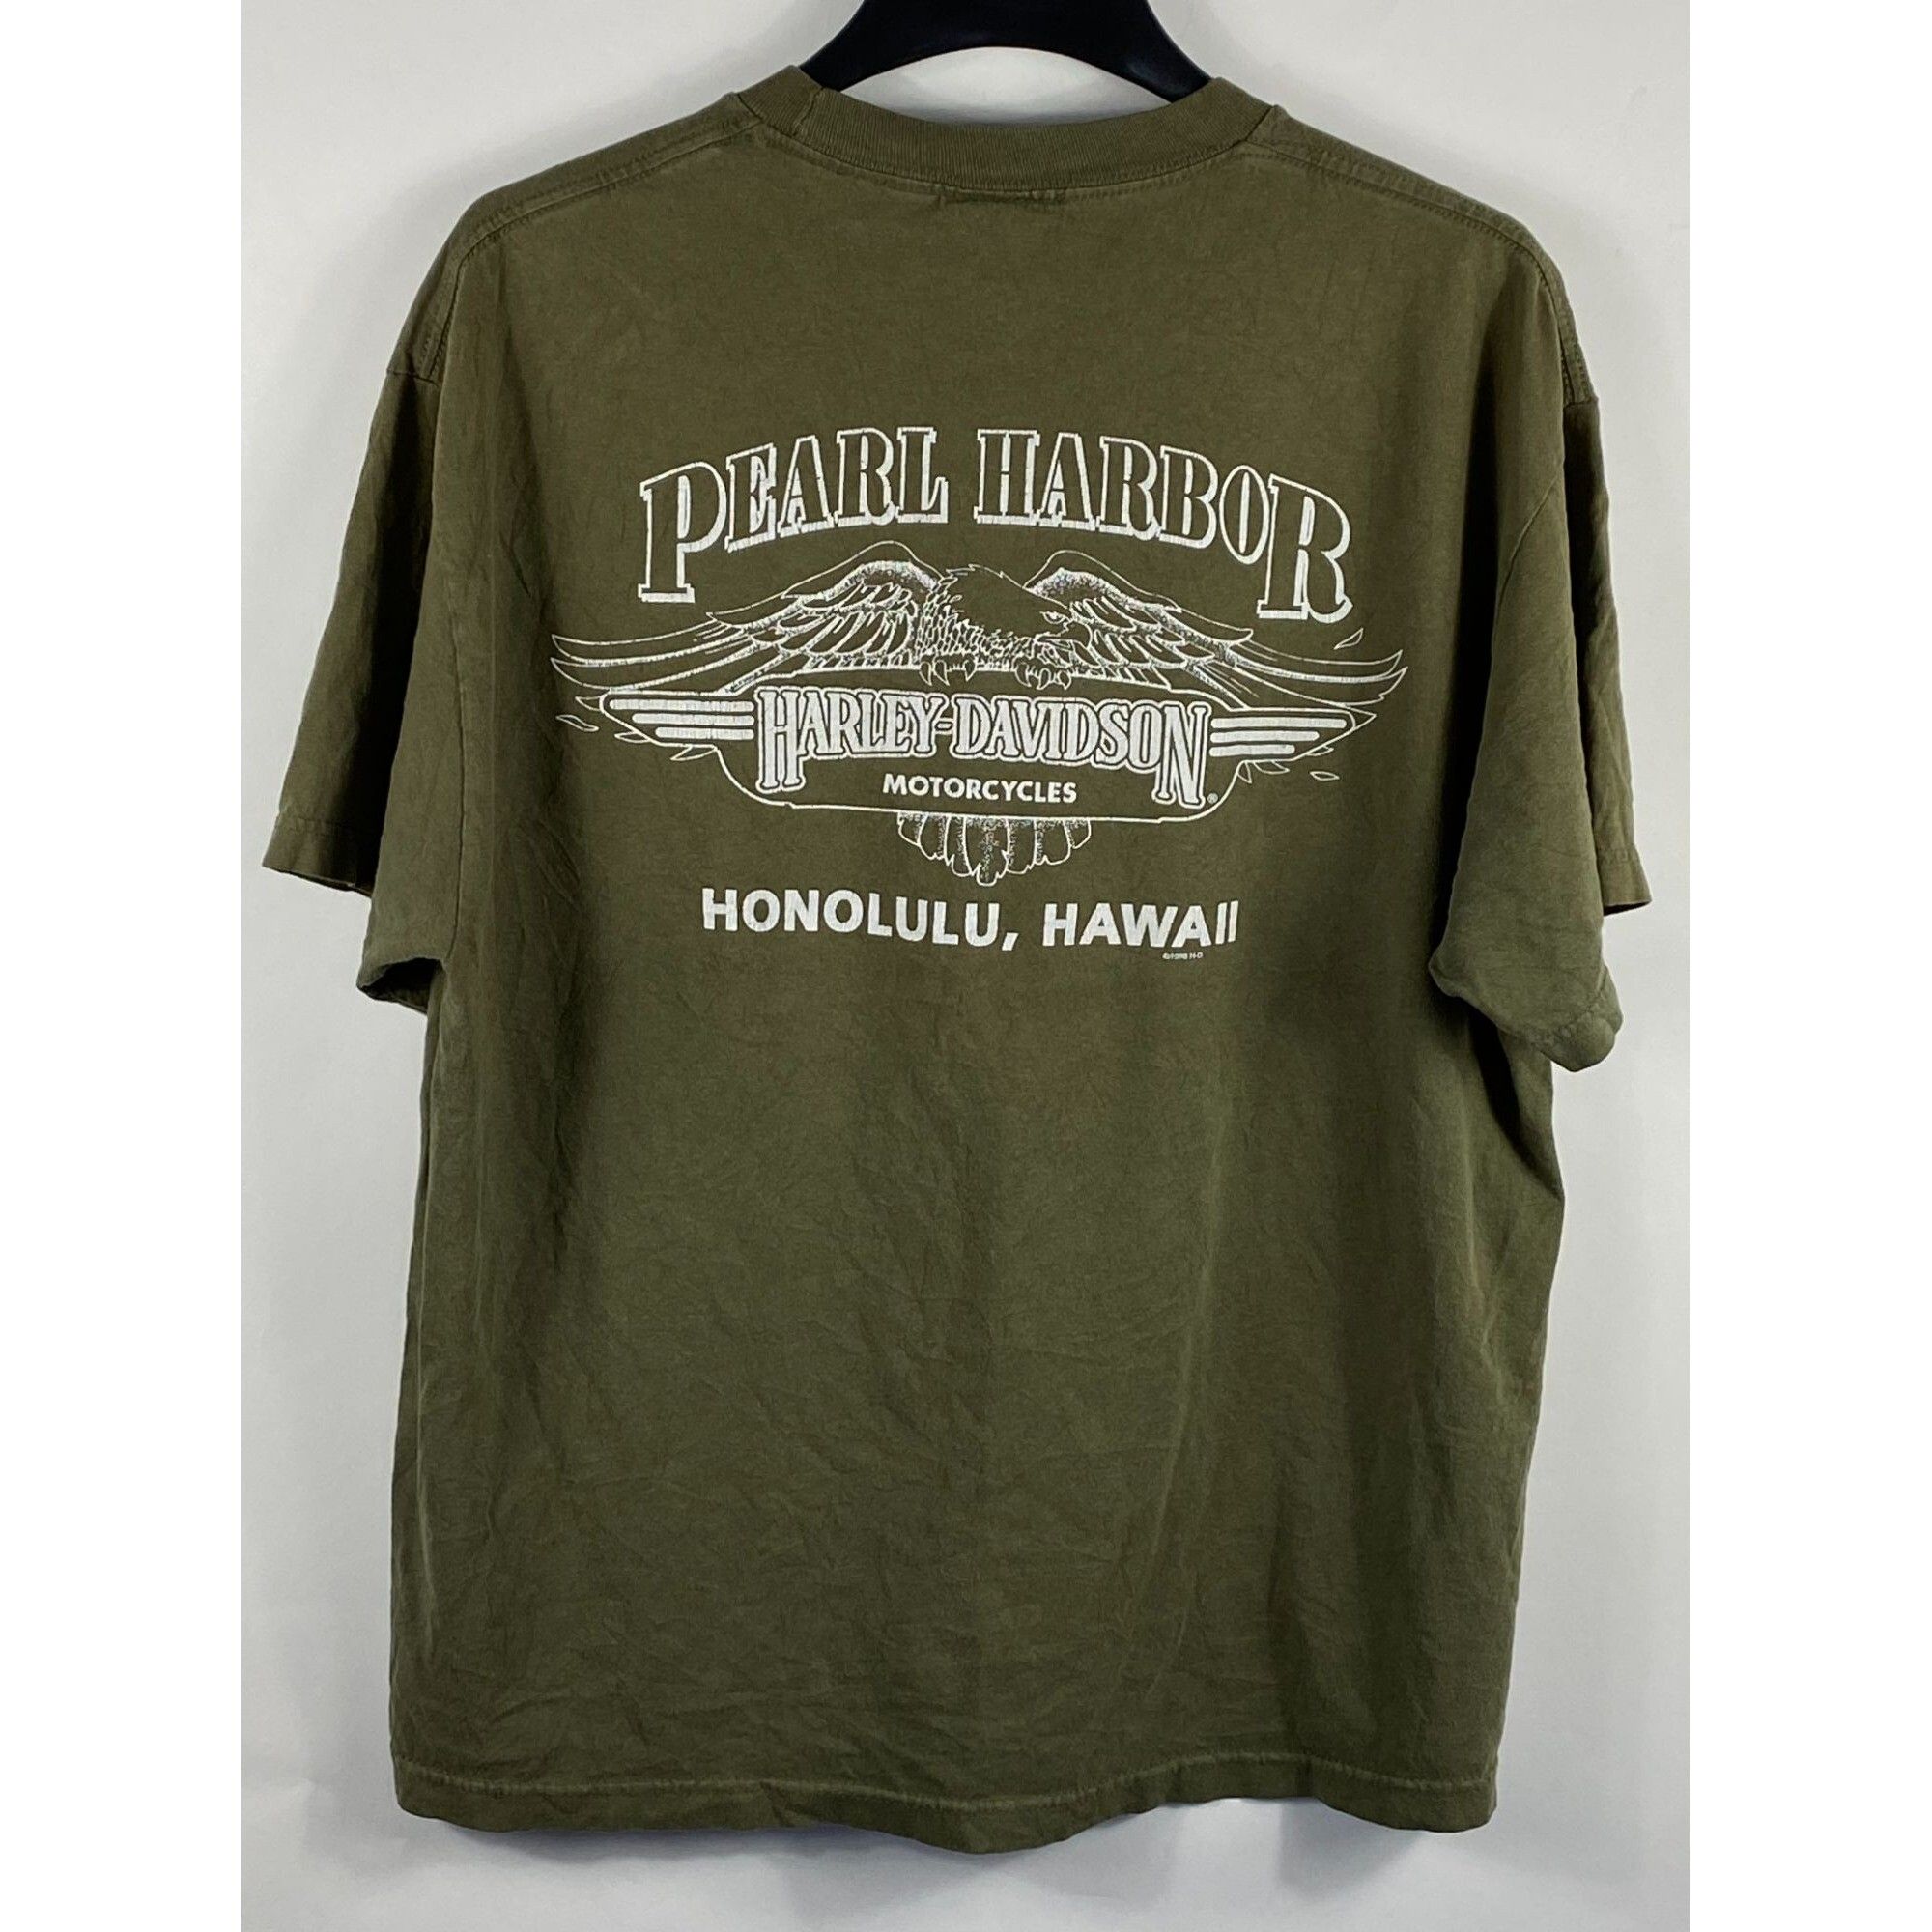 Harley Davidson Vintage Harley Davidson Pearl Harbor Honolulu, Hawaii Tee Sh Size US XL / EU 56 / 4 - 2 Preview